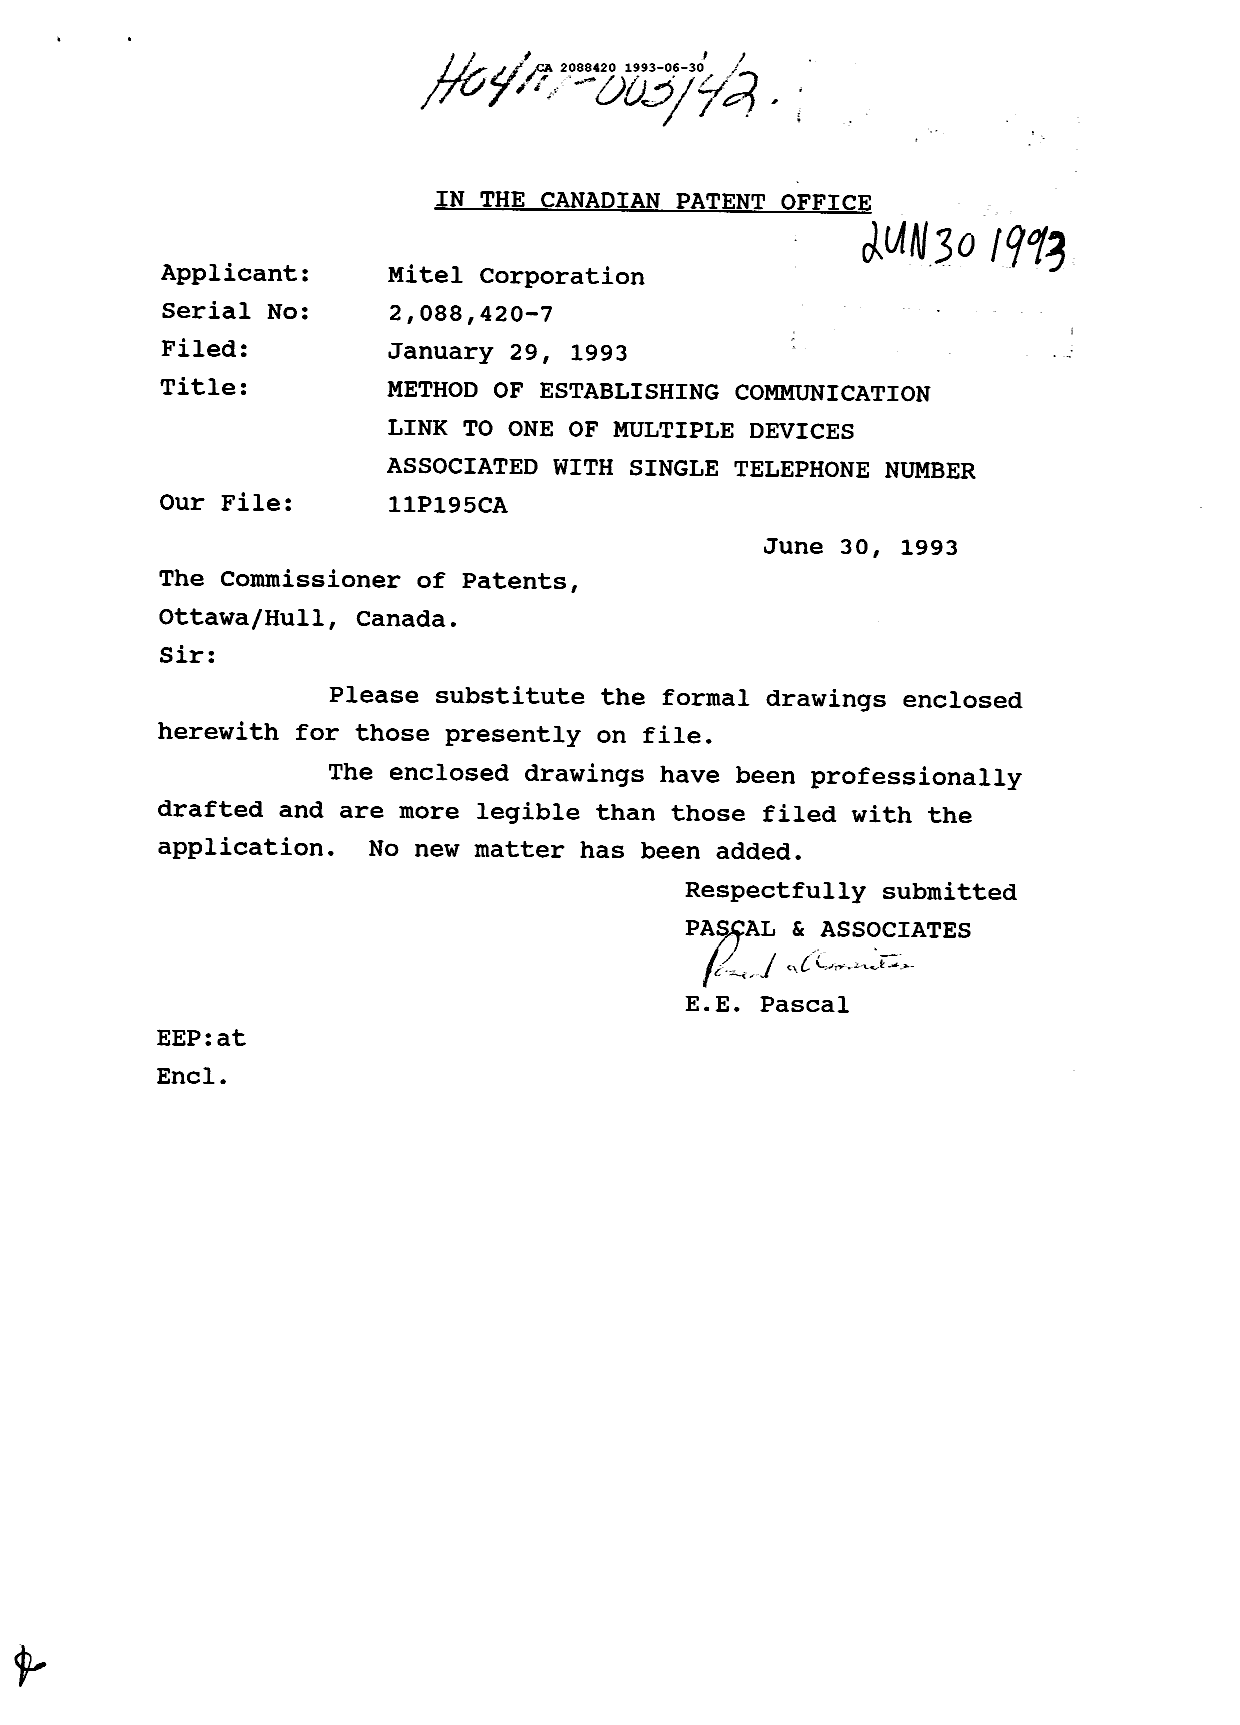 Canadian Patent Document 2088420. Prosecution Correspondence 19930630. Image 1 of 1